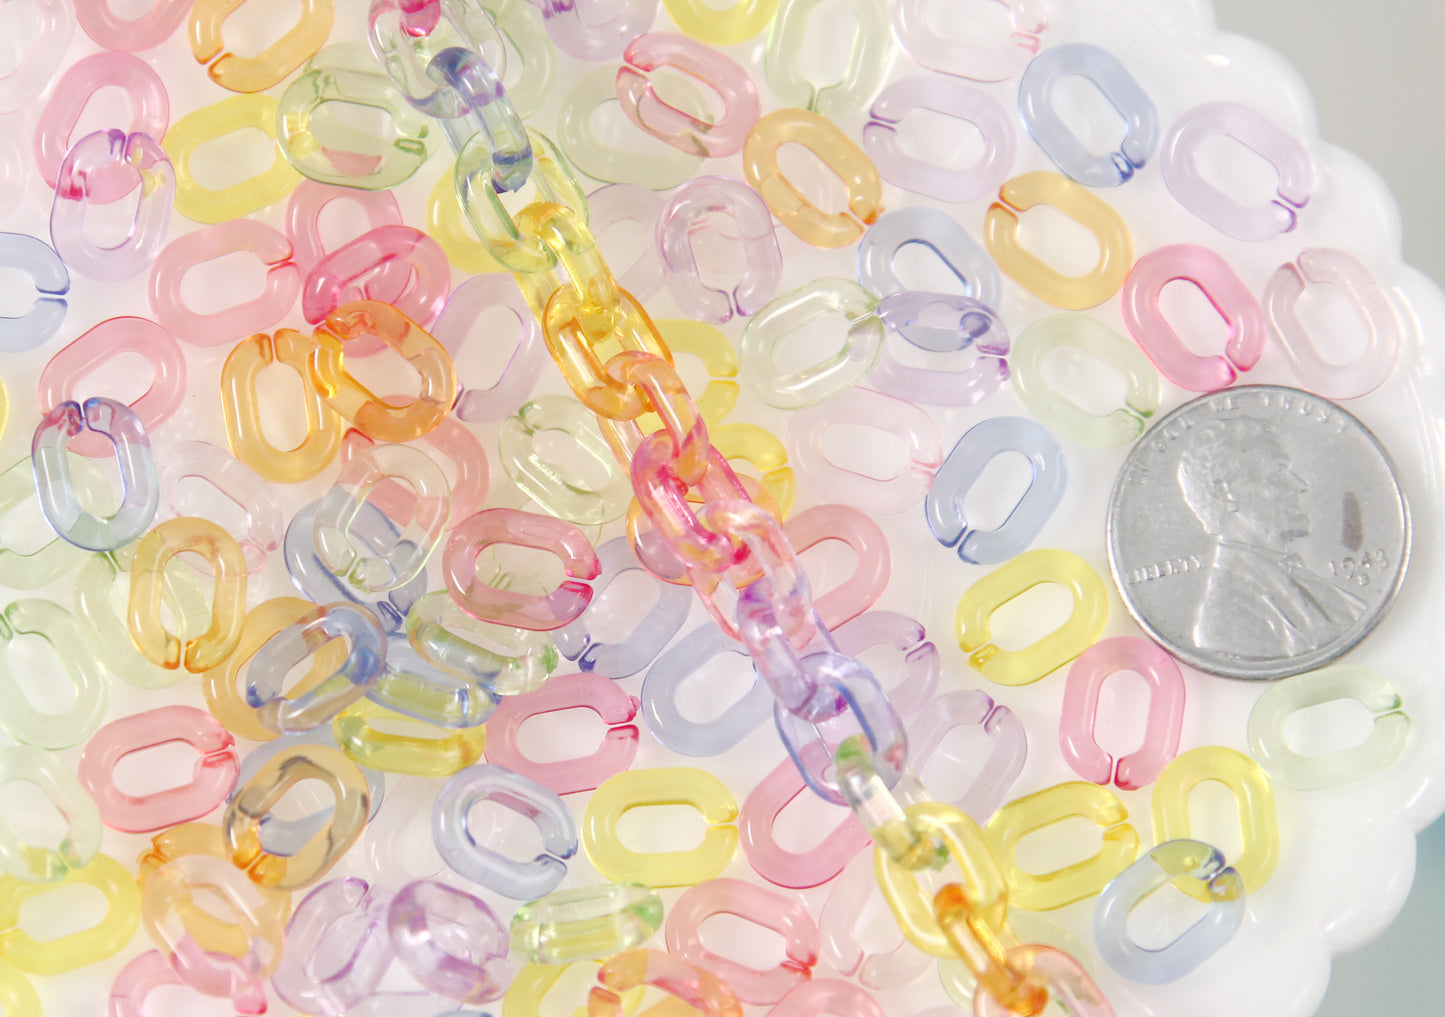 Tiny Plastic Chain Links - 10mm Mini Transparent Colorful Plastic or Acrylic Chain Links - Mixed Colors - 200 pc